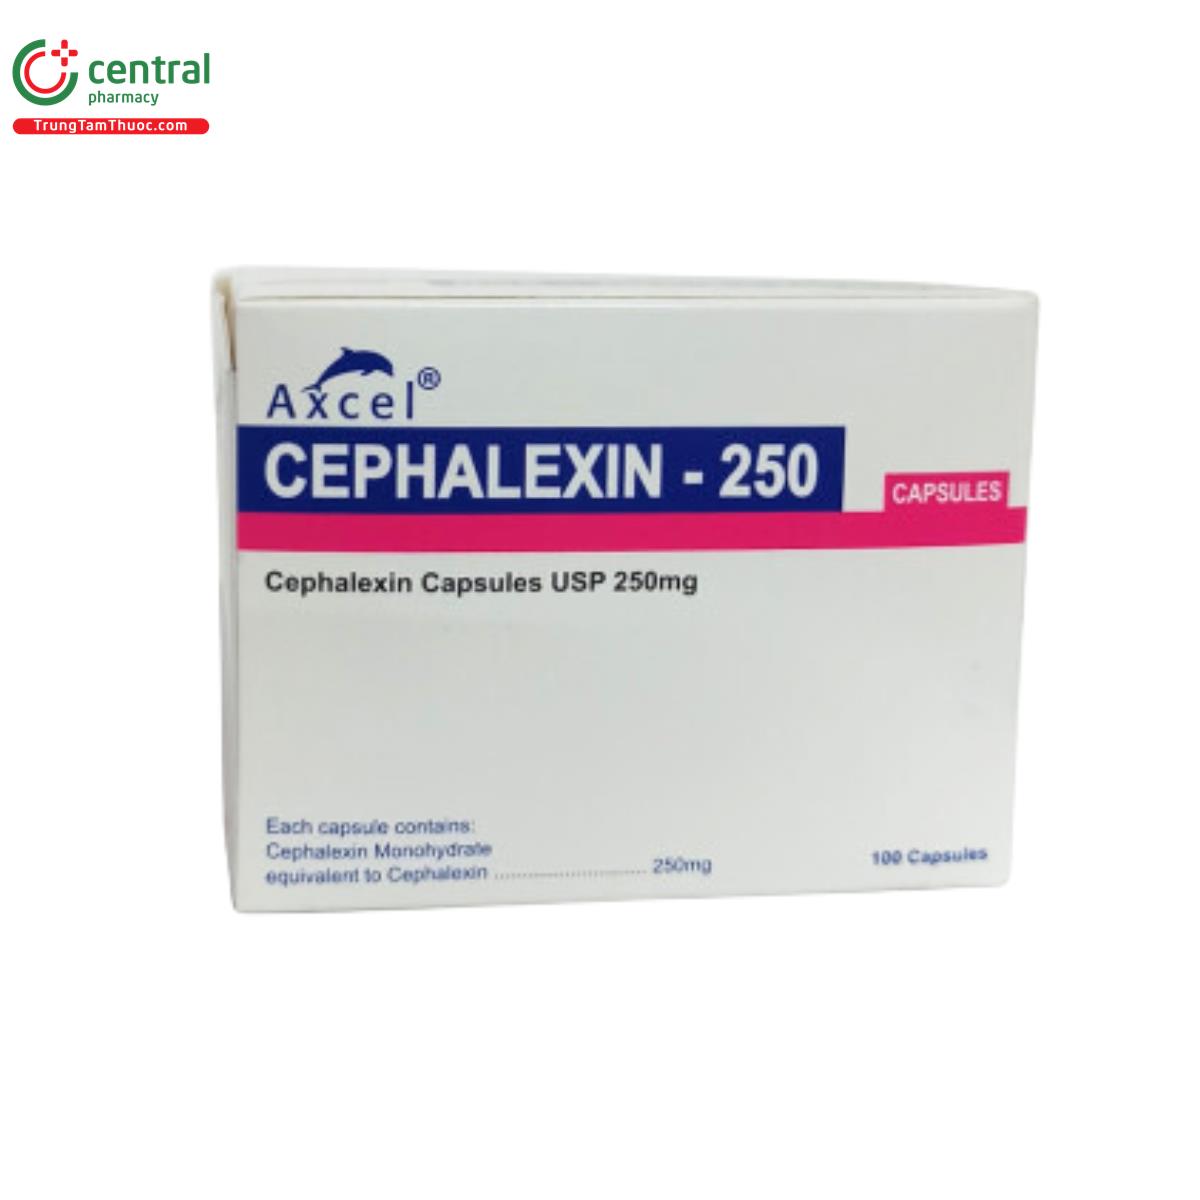 axcel cephalexin 250 capsules 1 M5402